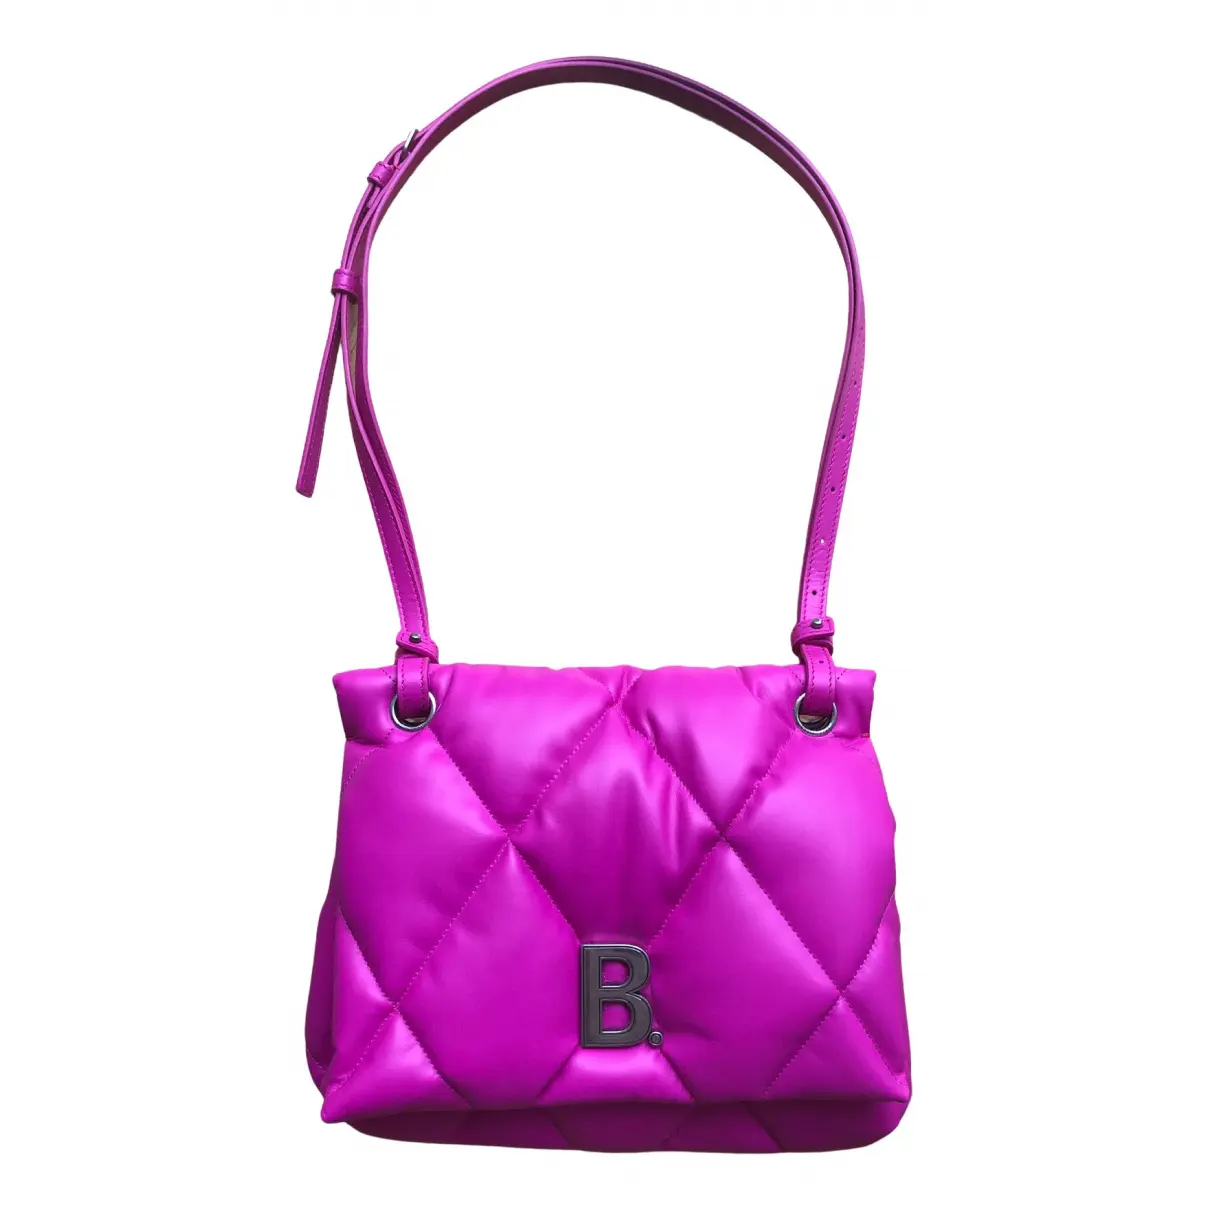 Touch Puffy leather handbag Balenciaga